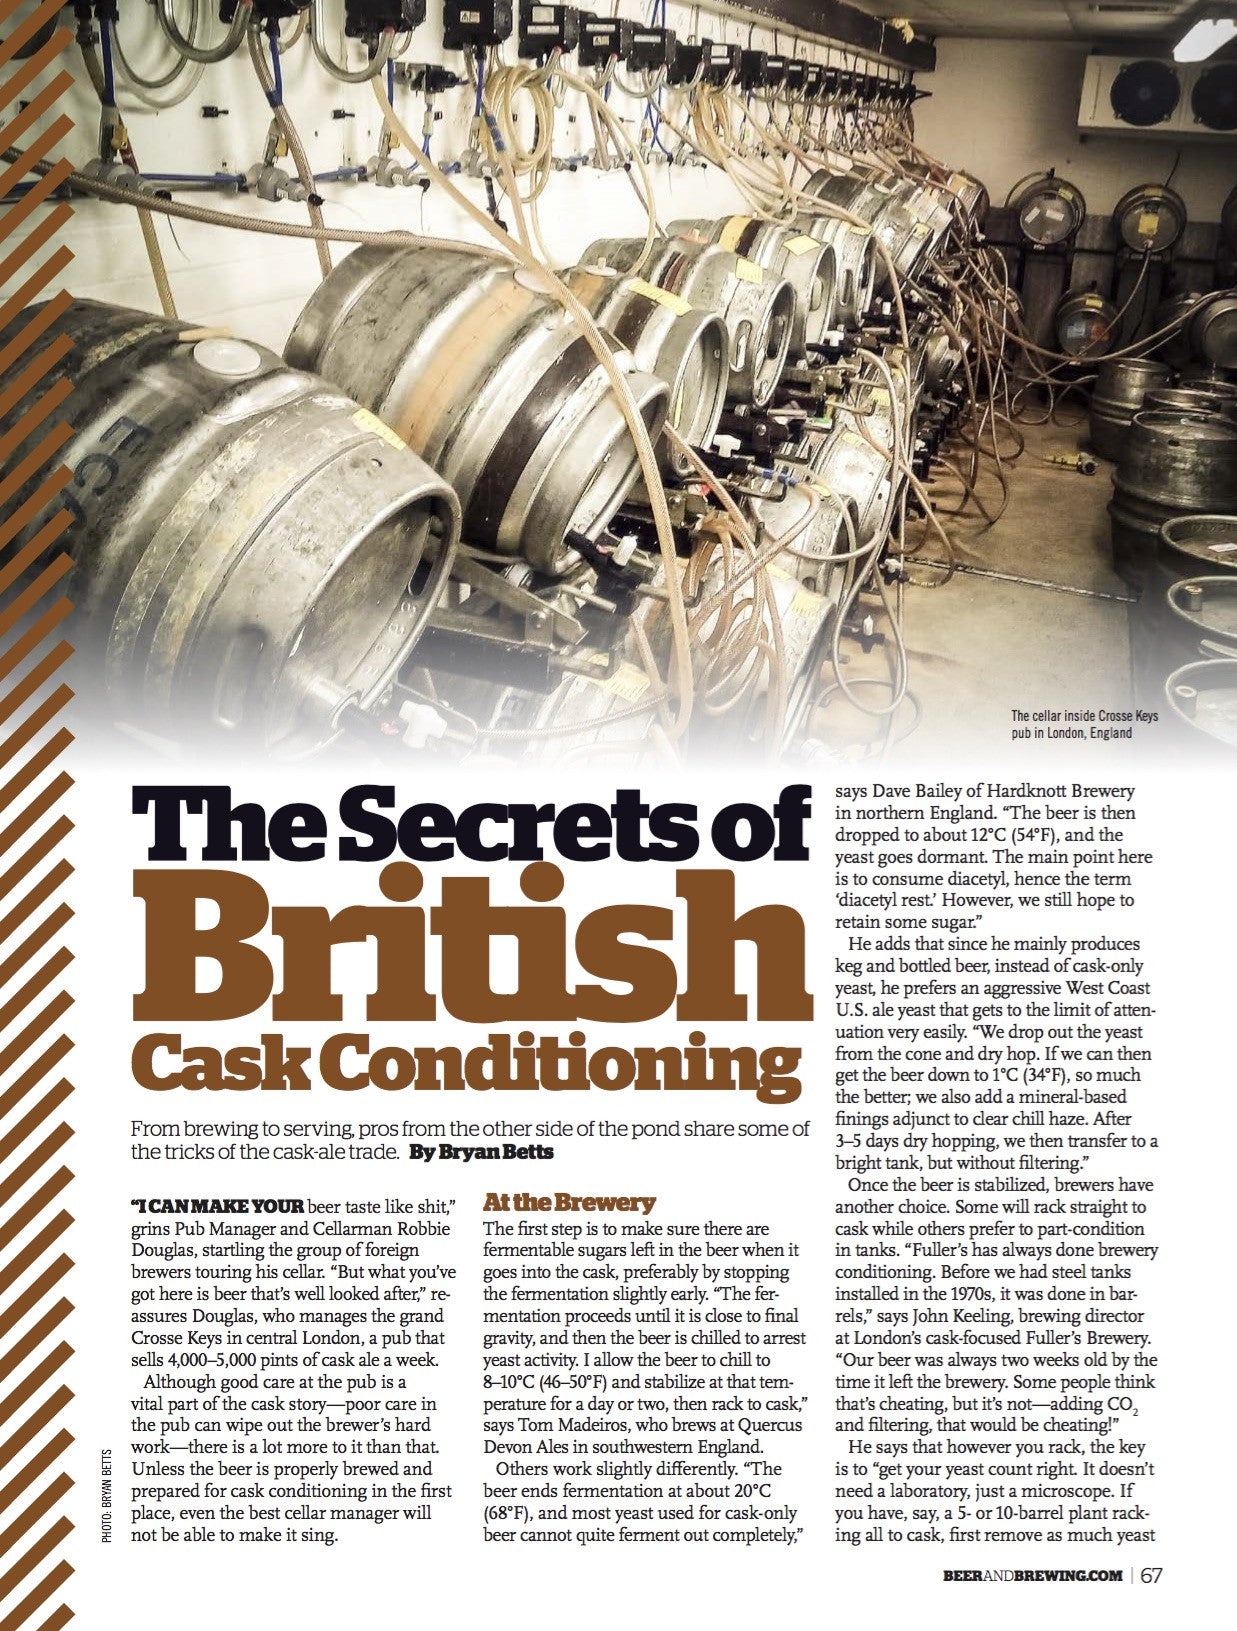 December 2015 - January 2016 Issue (Big Beers) - Craft Beer & Brewing